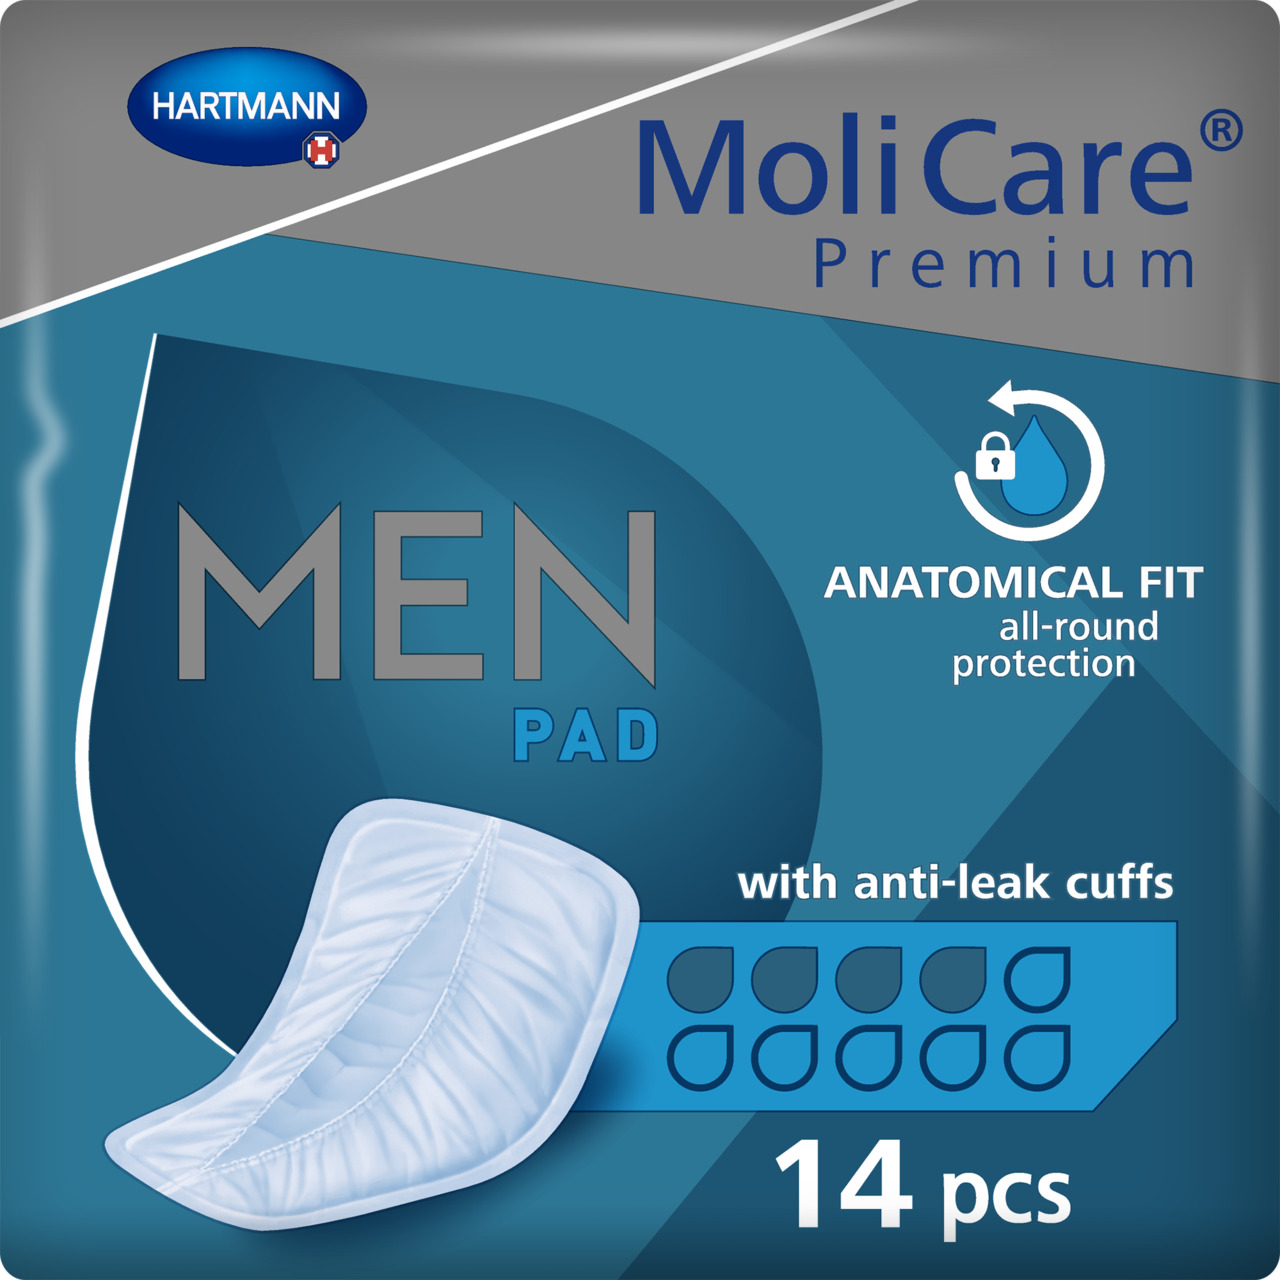 MoliCare Premium Men Pad 4 Drops